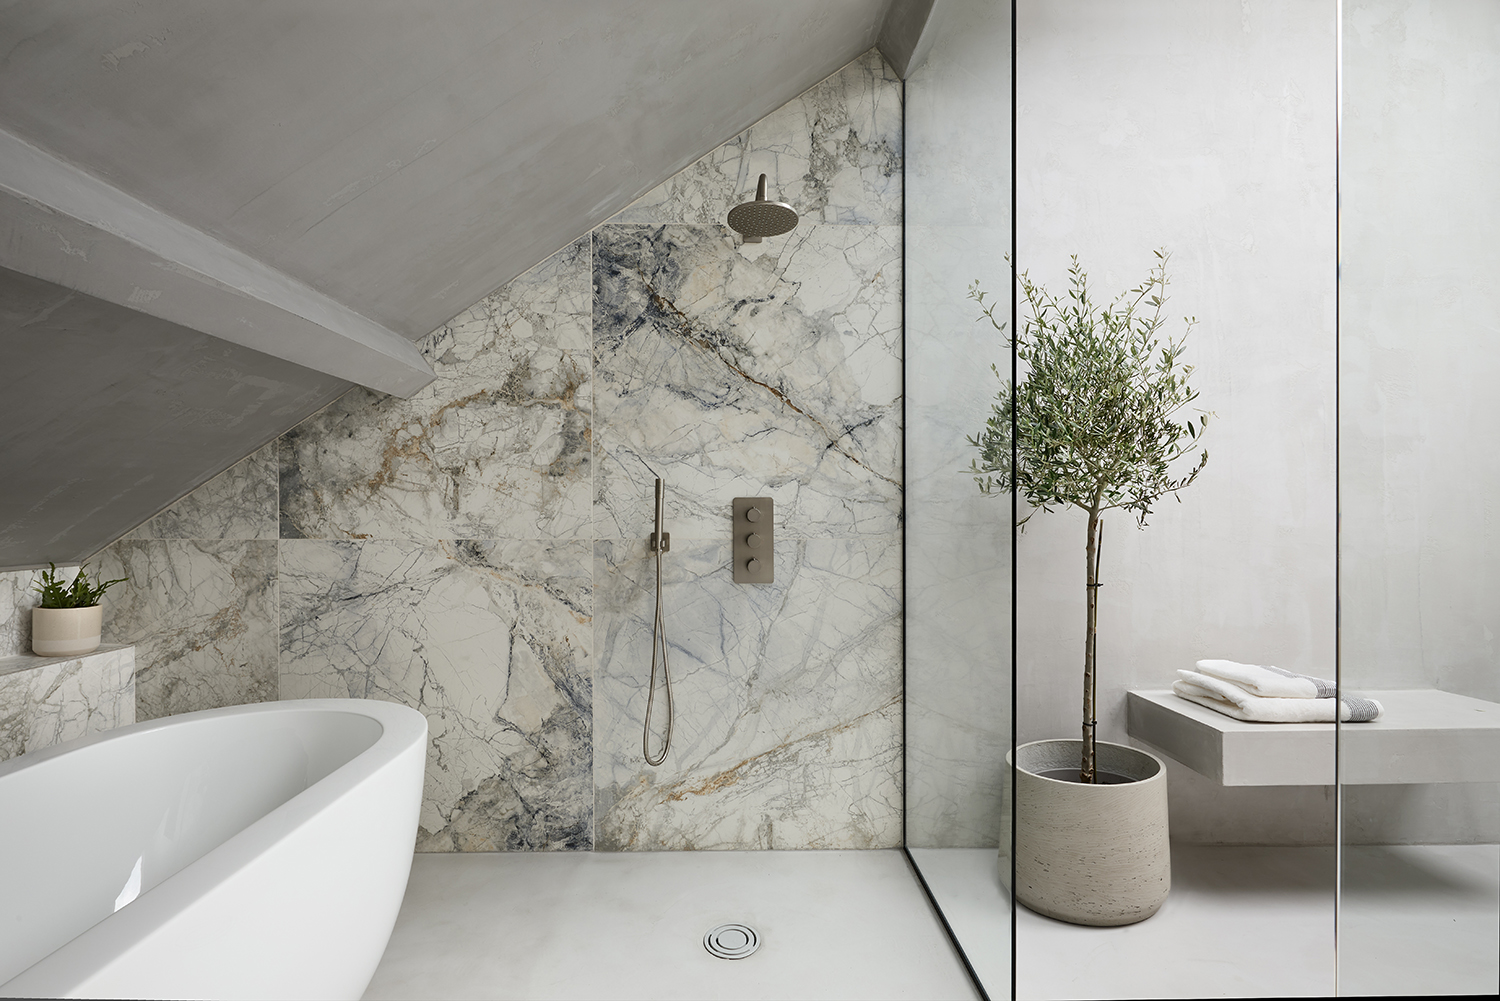 Spa bathroom ideas – how to create a little luxury at home | Livingetc